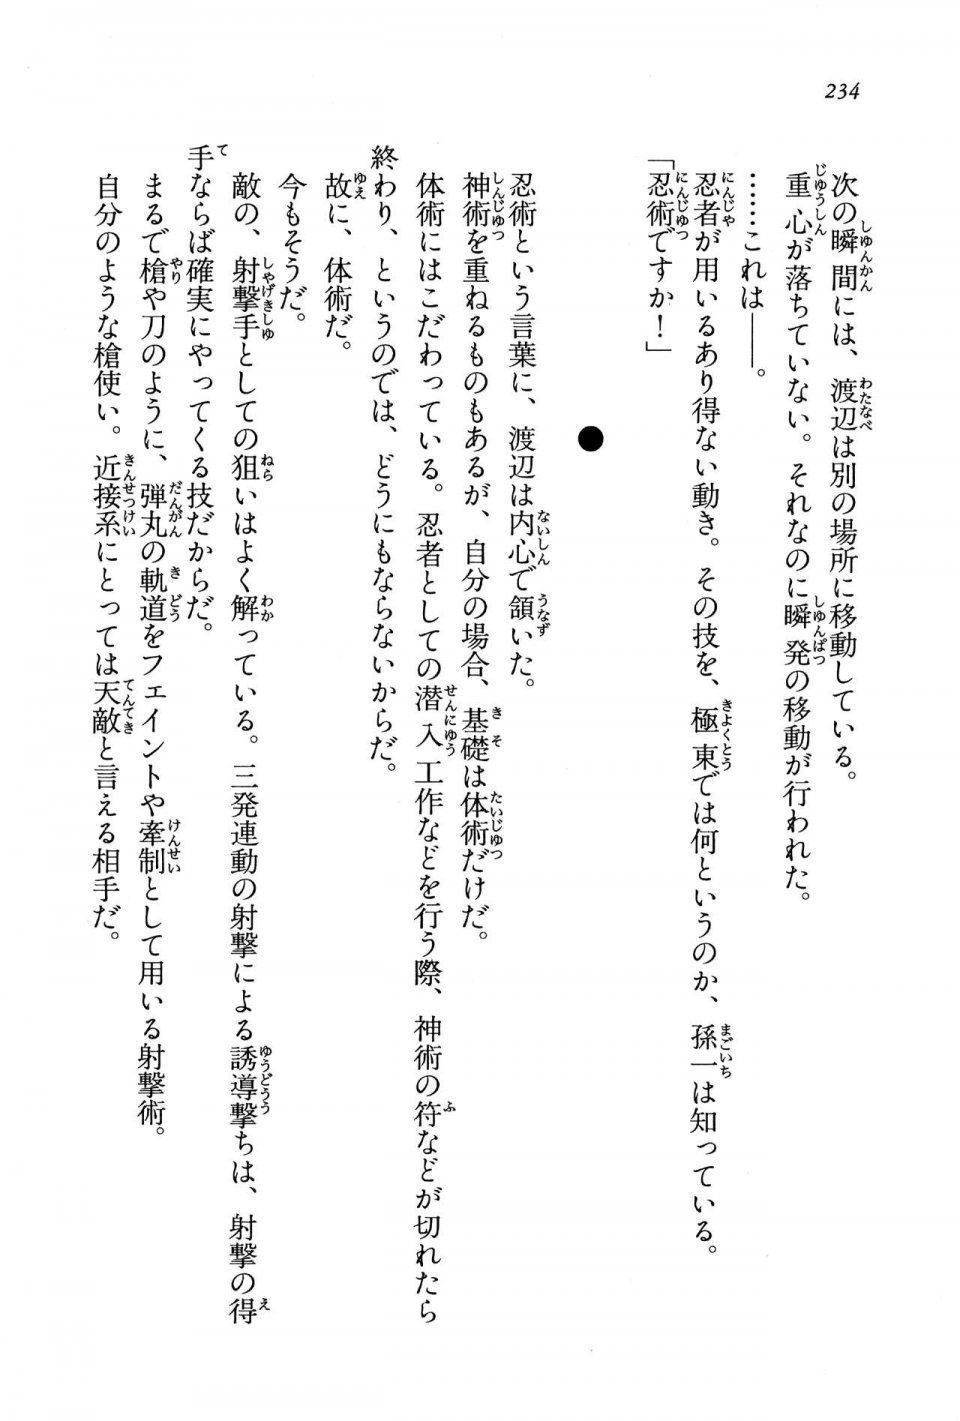 Kyoukai Senjou no Horizon BD Special Mininovel Vol 8(4B) - Photo #238